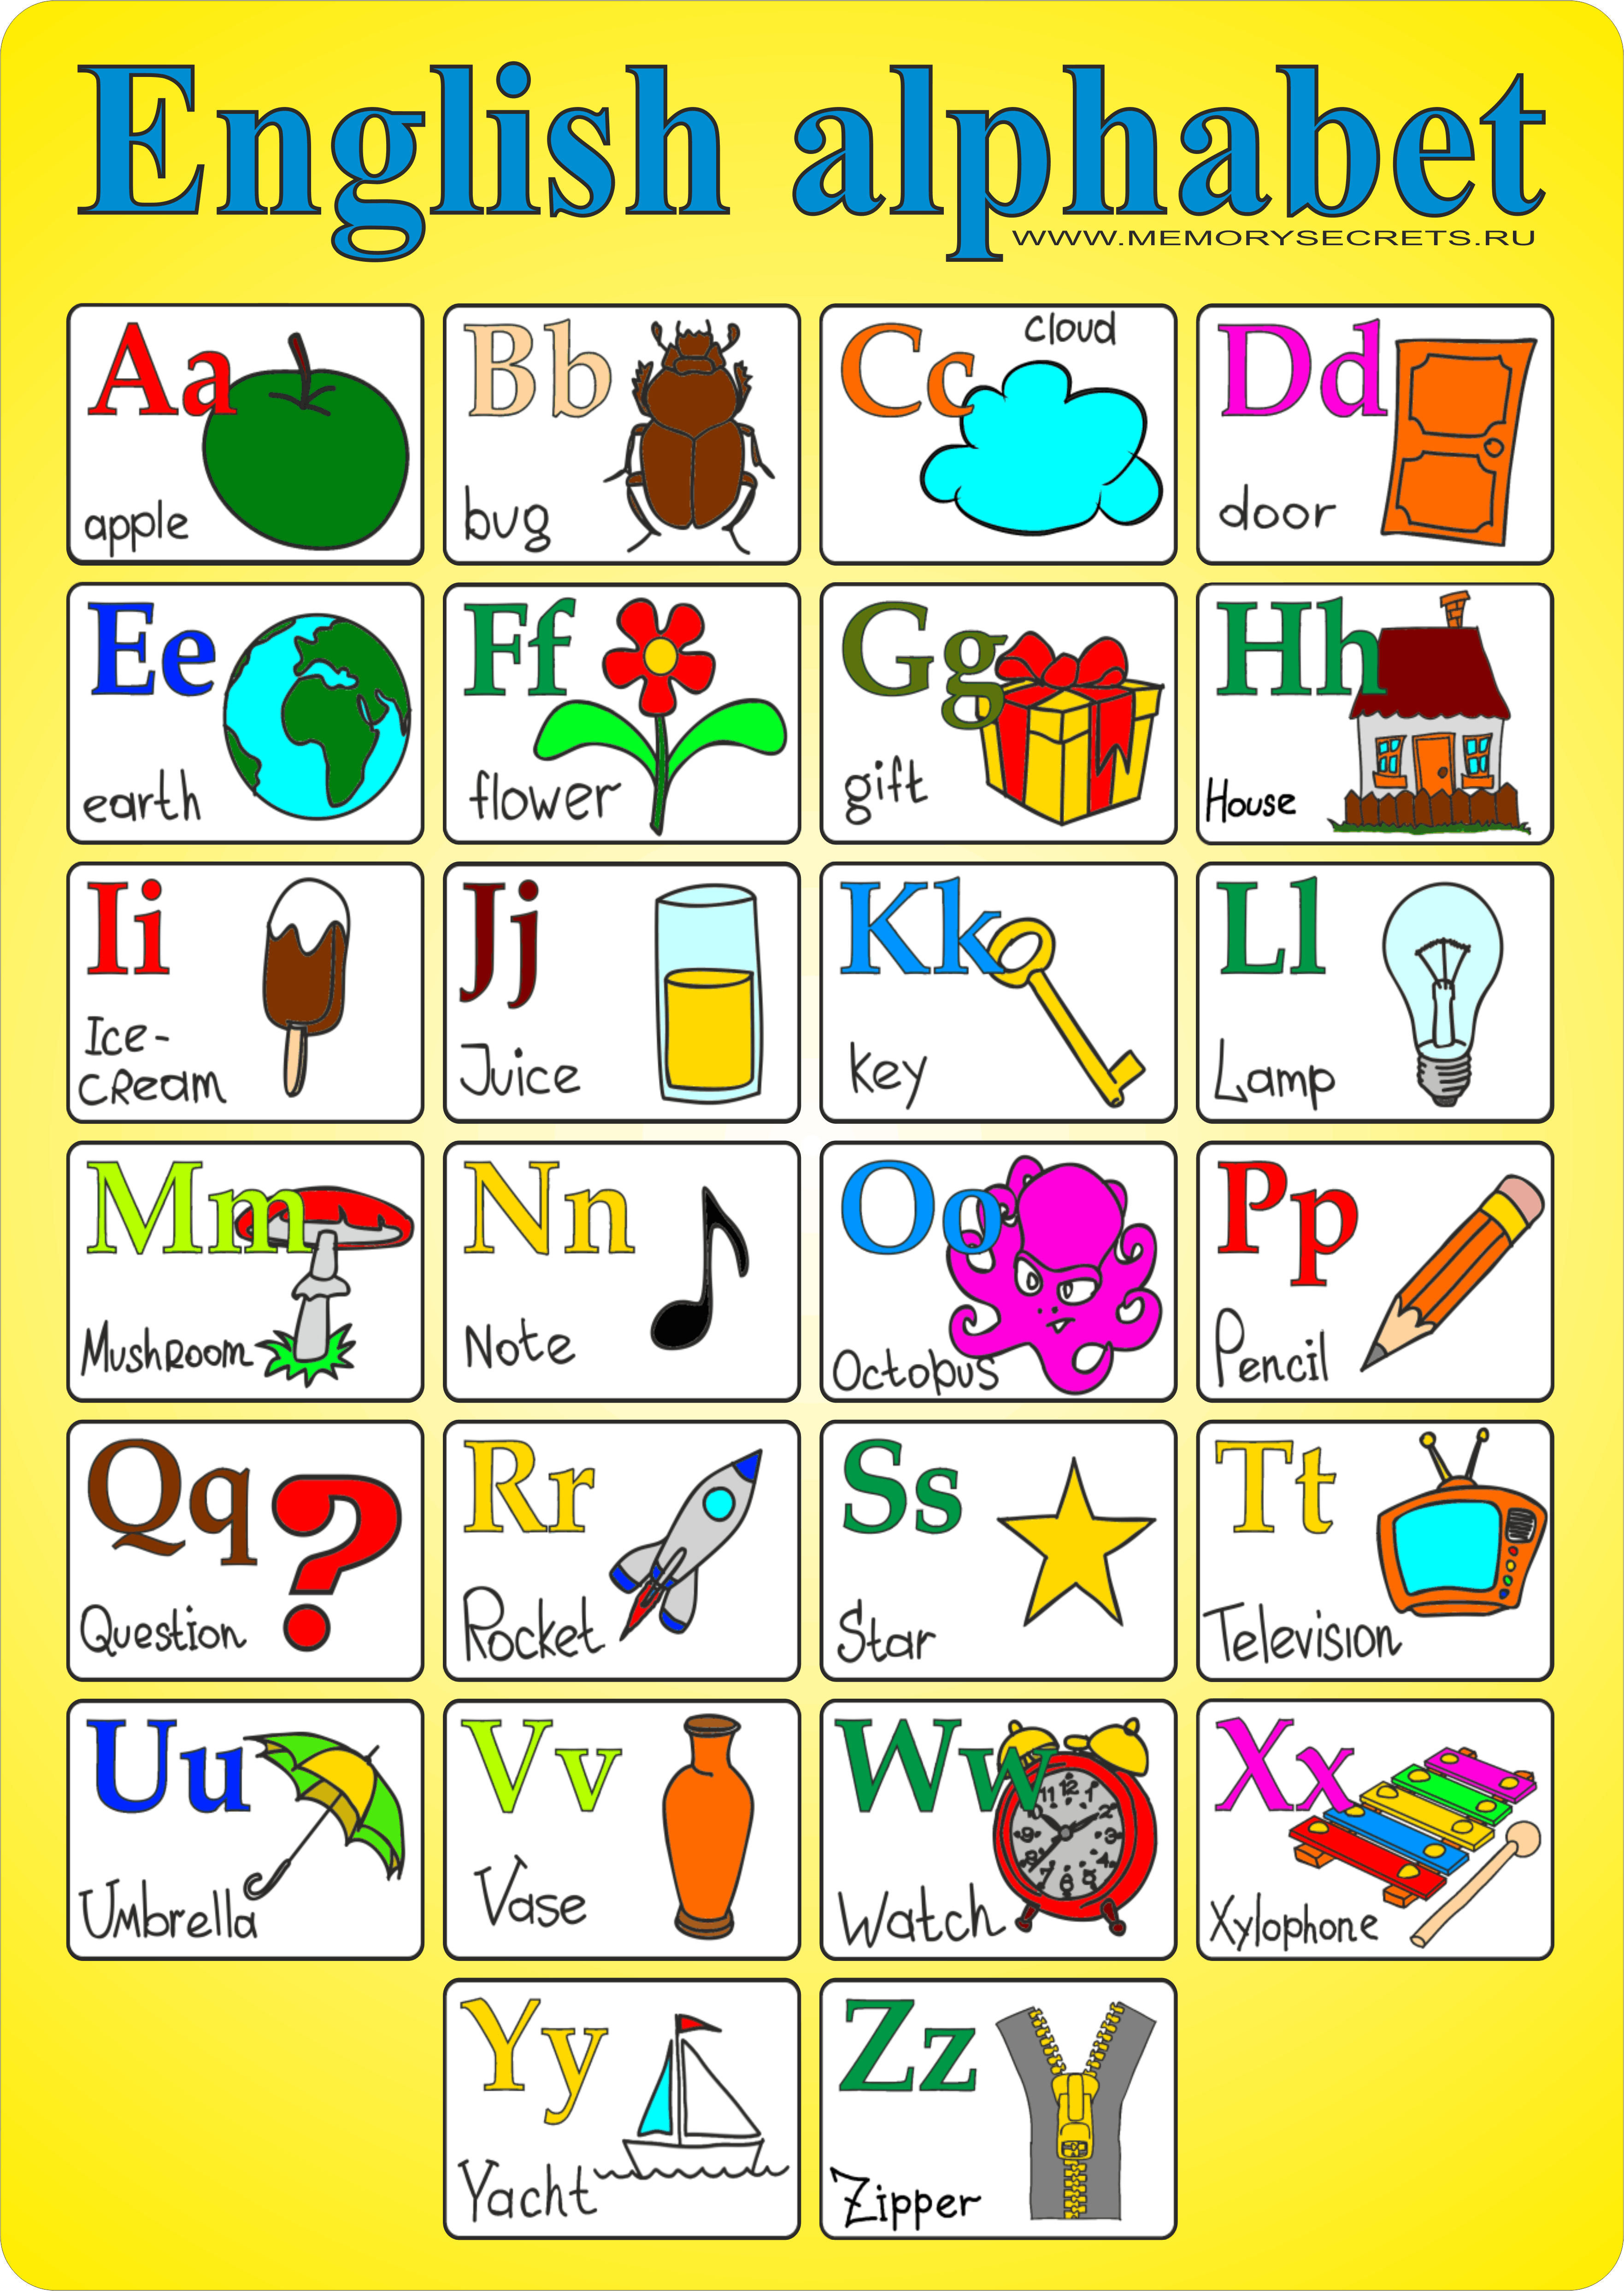 Английский алфавит. Английский алфавит для детей. Английская Азбука для детей. Английская Азбука в картинках.